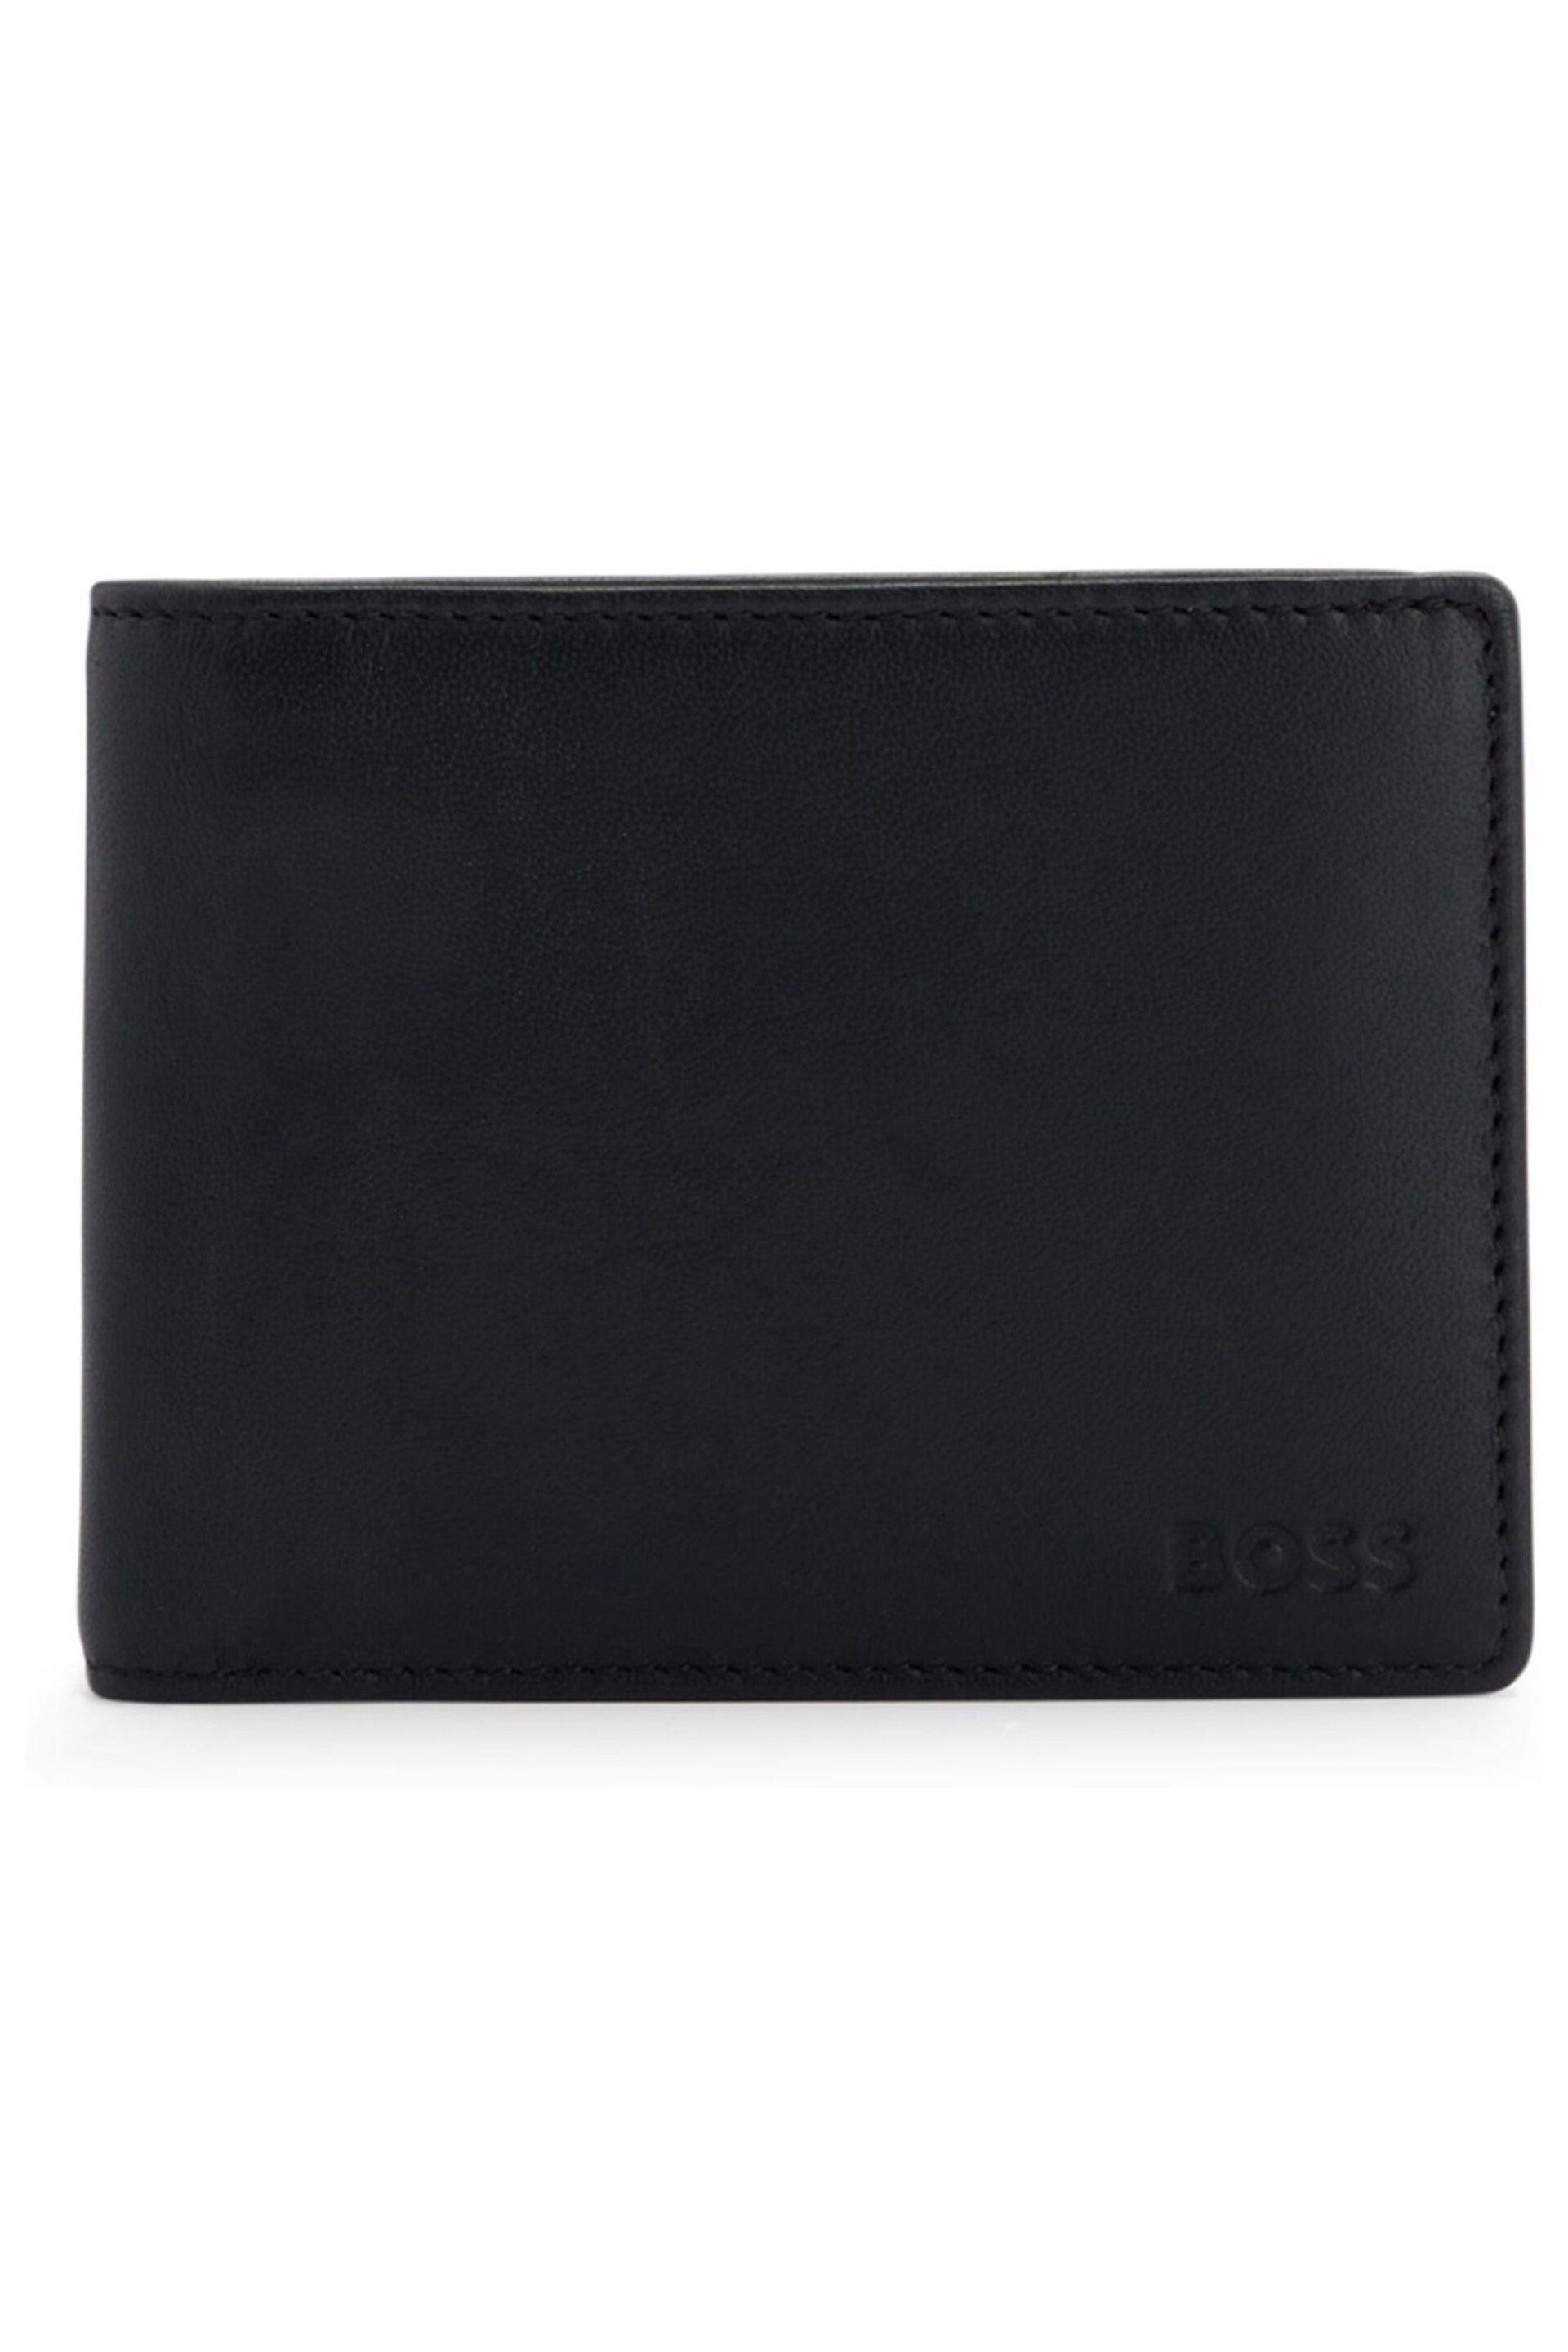 BOSS Black Arezzo Wallet - Image 1 of 4